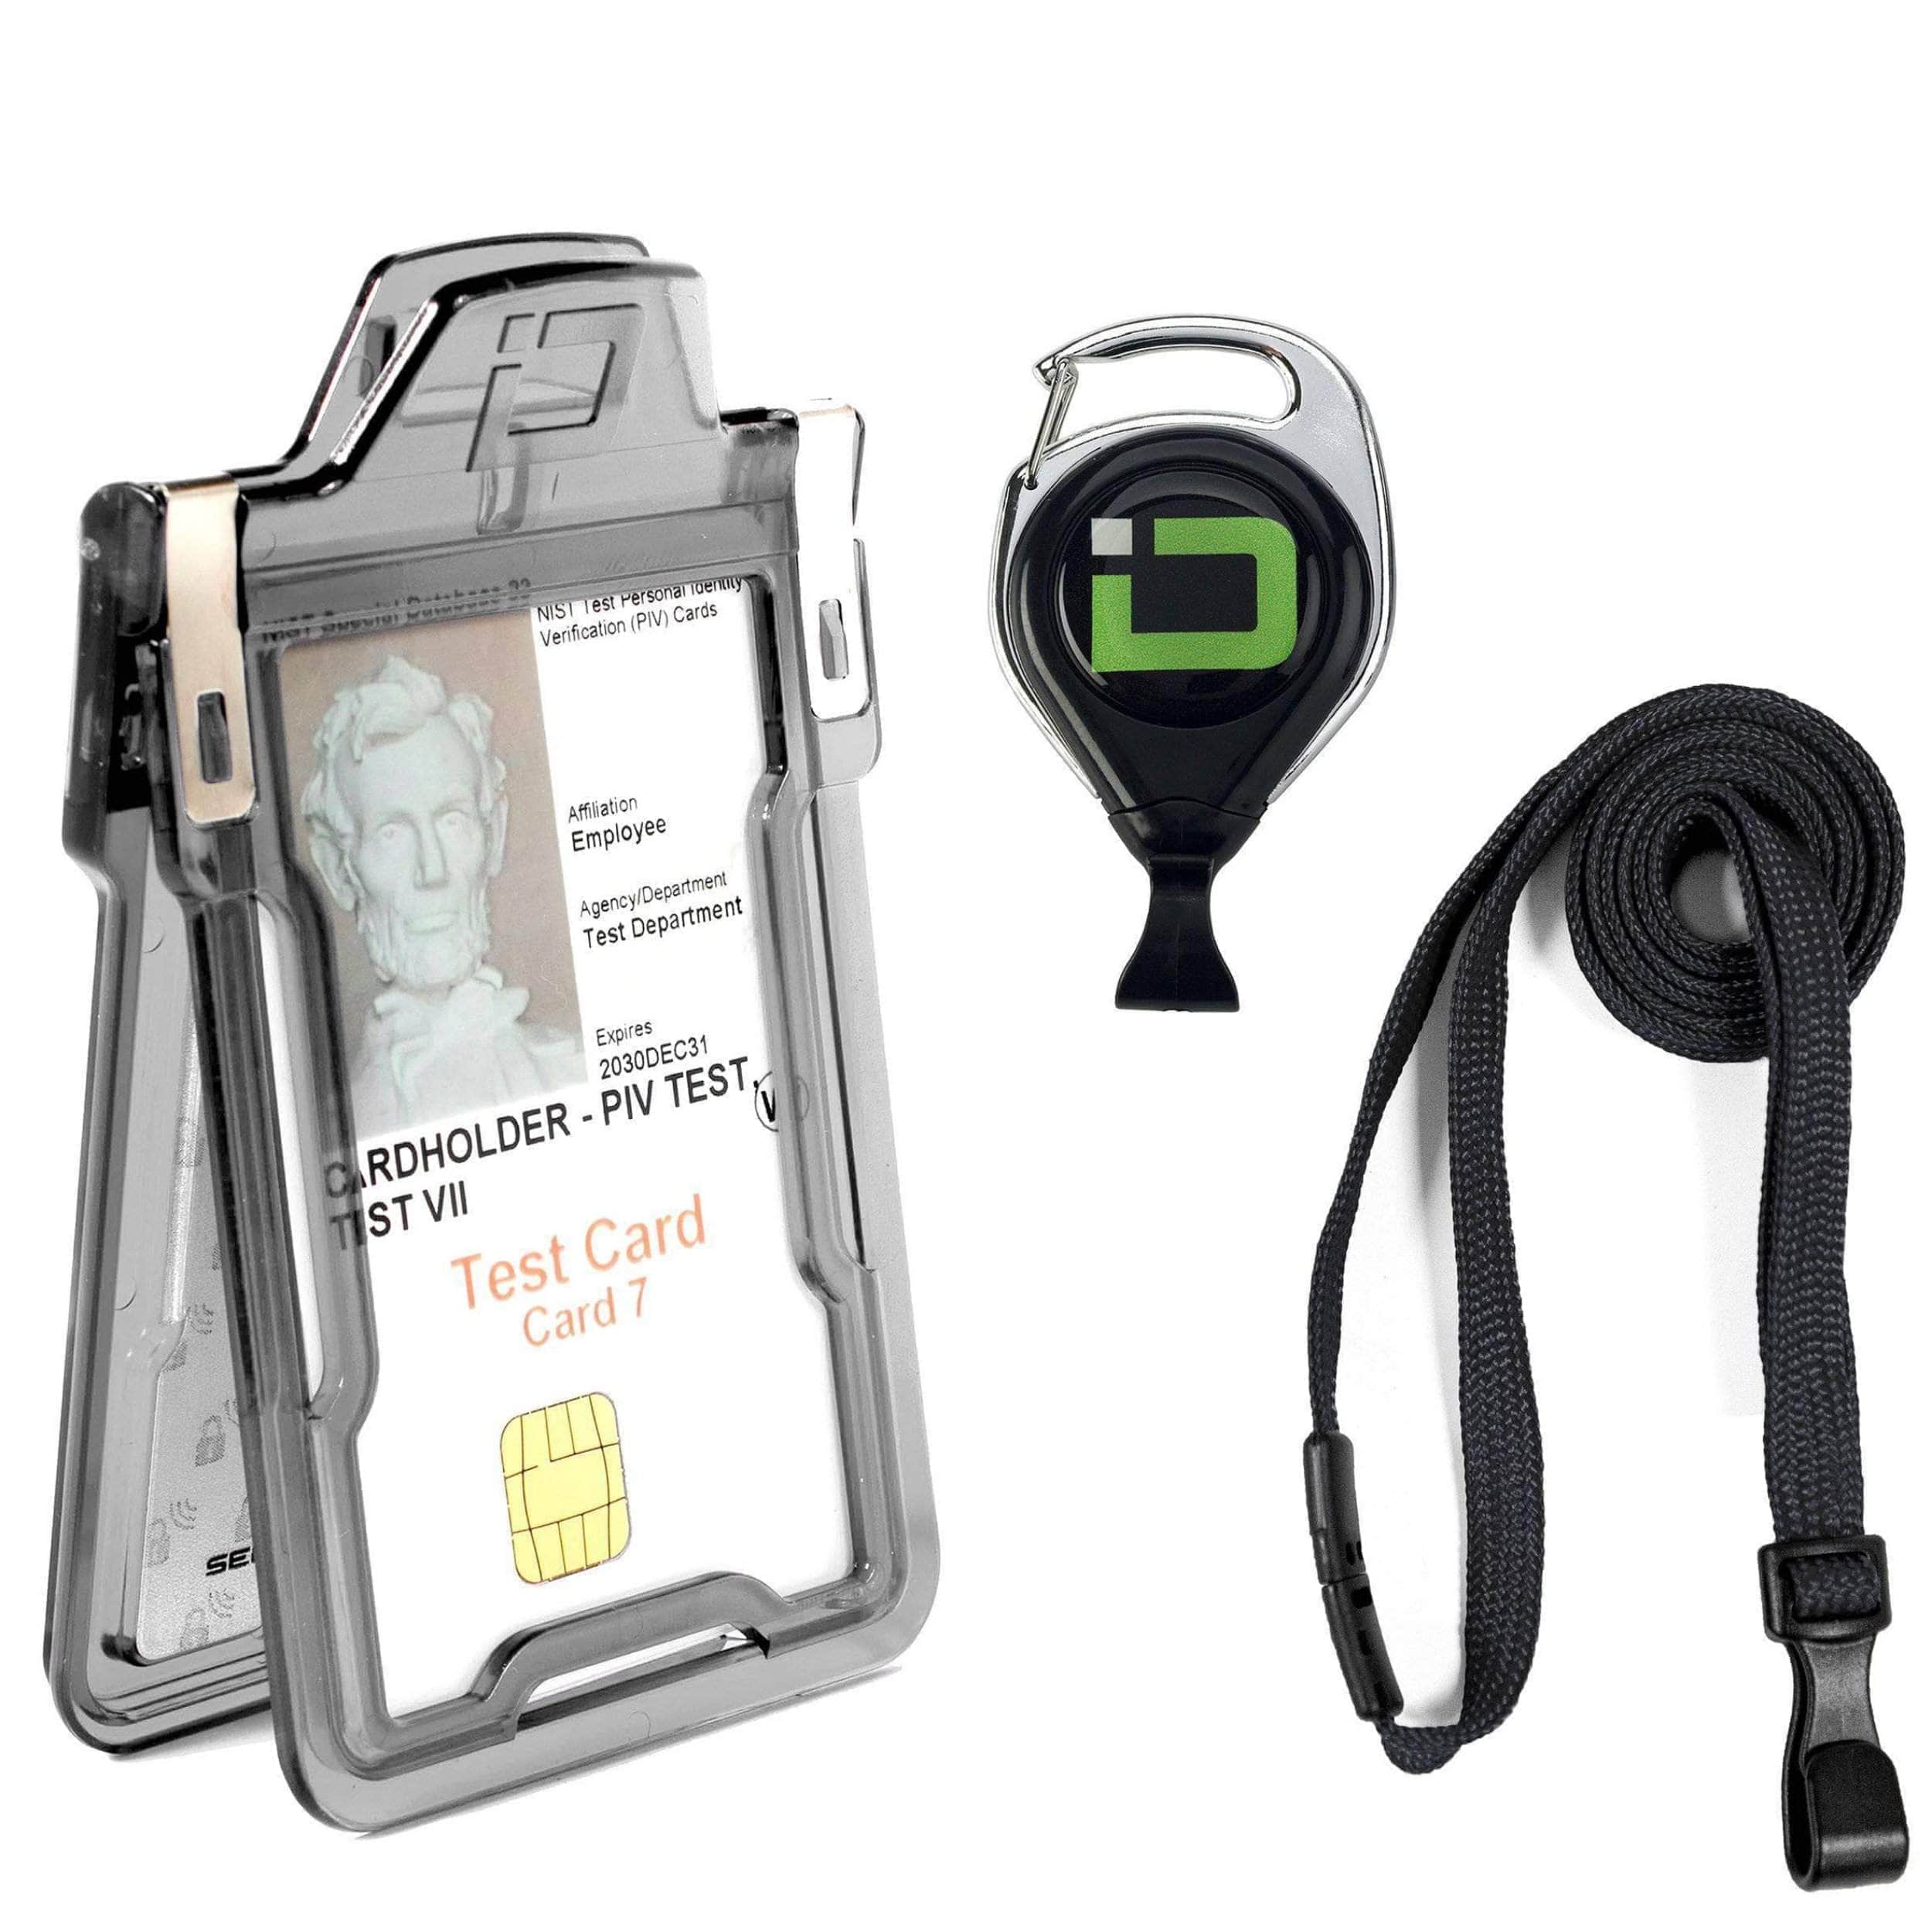 ID Stronghold Badgeholder Clear Black Secure Badge Holder Classic, Vertical 1 Card Holder, Retractable Reel, and Lanyard Bundle